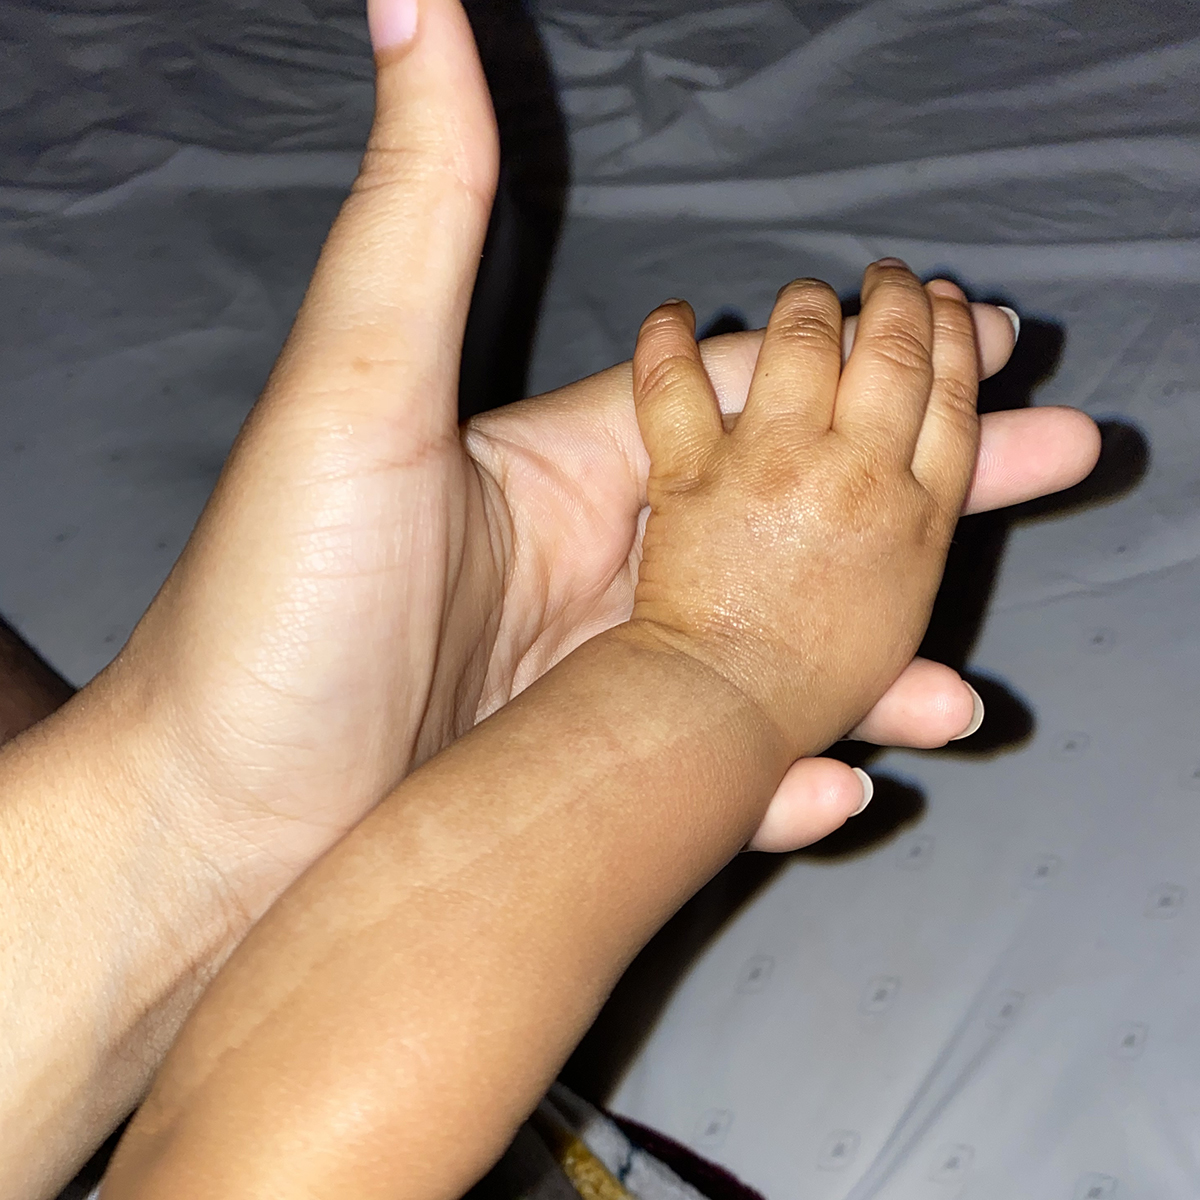 Jazmyne holding her baby's hand.